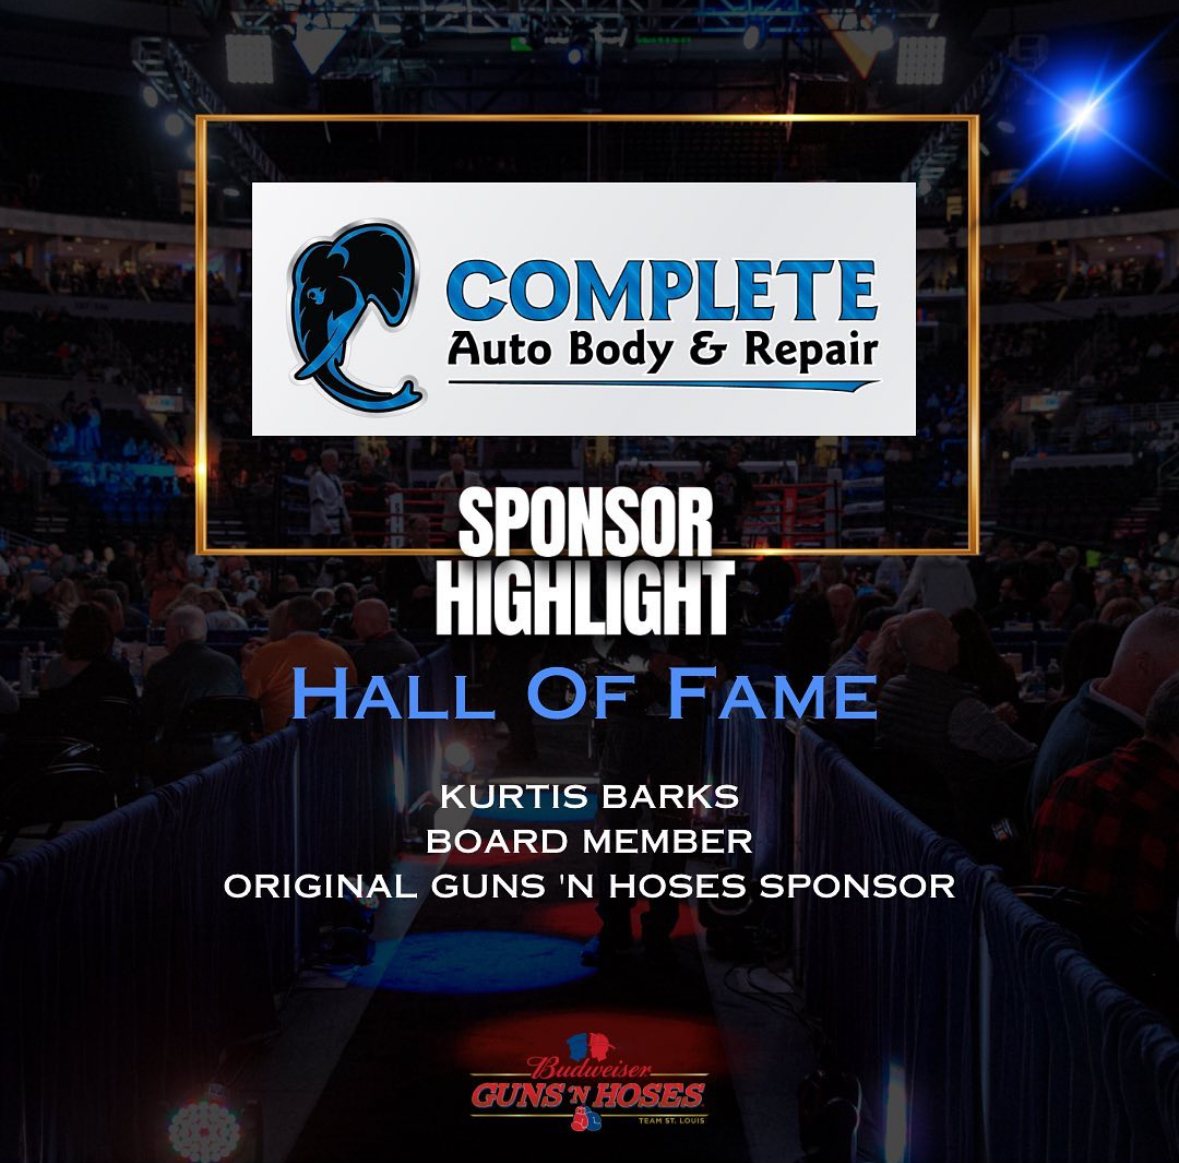 Guns 'n Hoses Sponsor Hall of Fame Salutes Kurtis Barks, Complete Auto Body & Repair